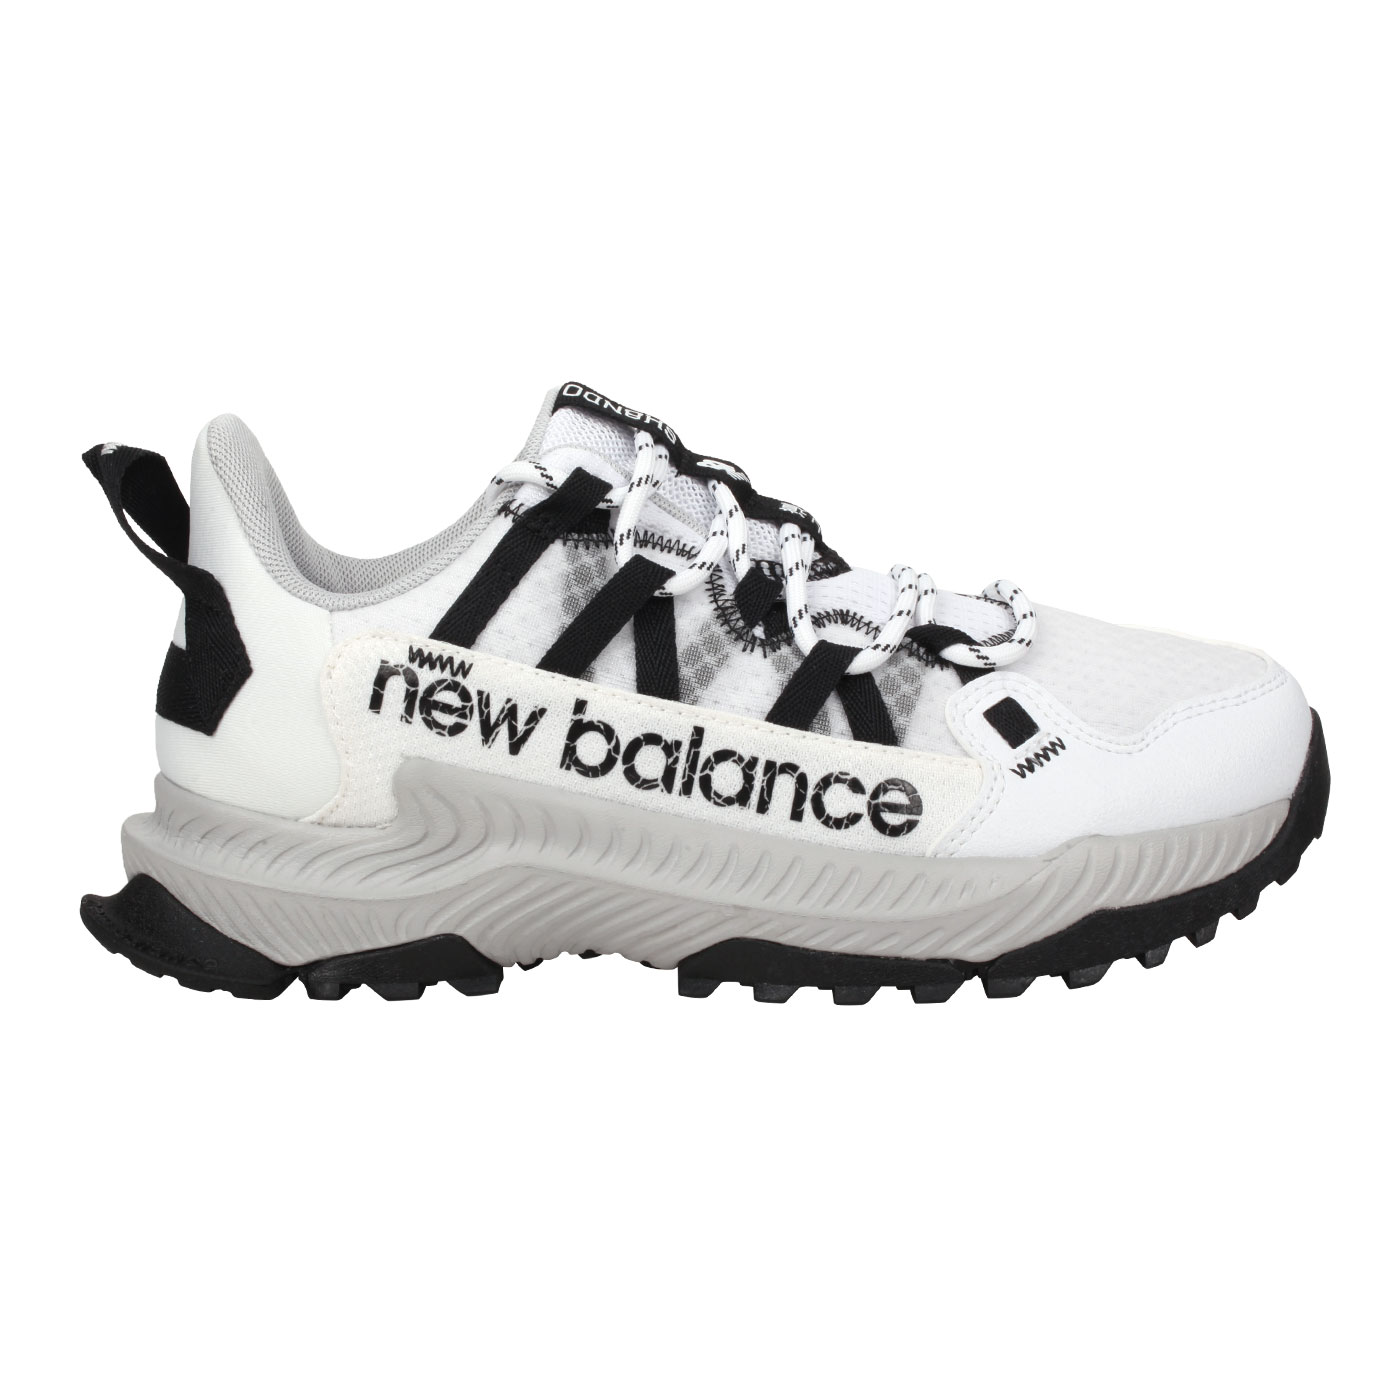 NEW BALANCE 女款越野跑鞋 WTSHALW - 白黑